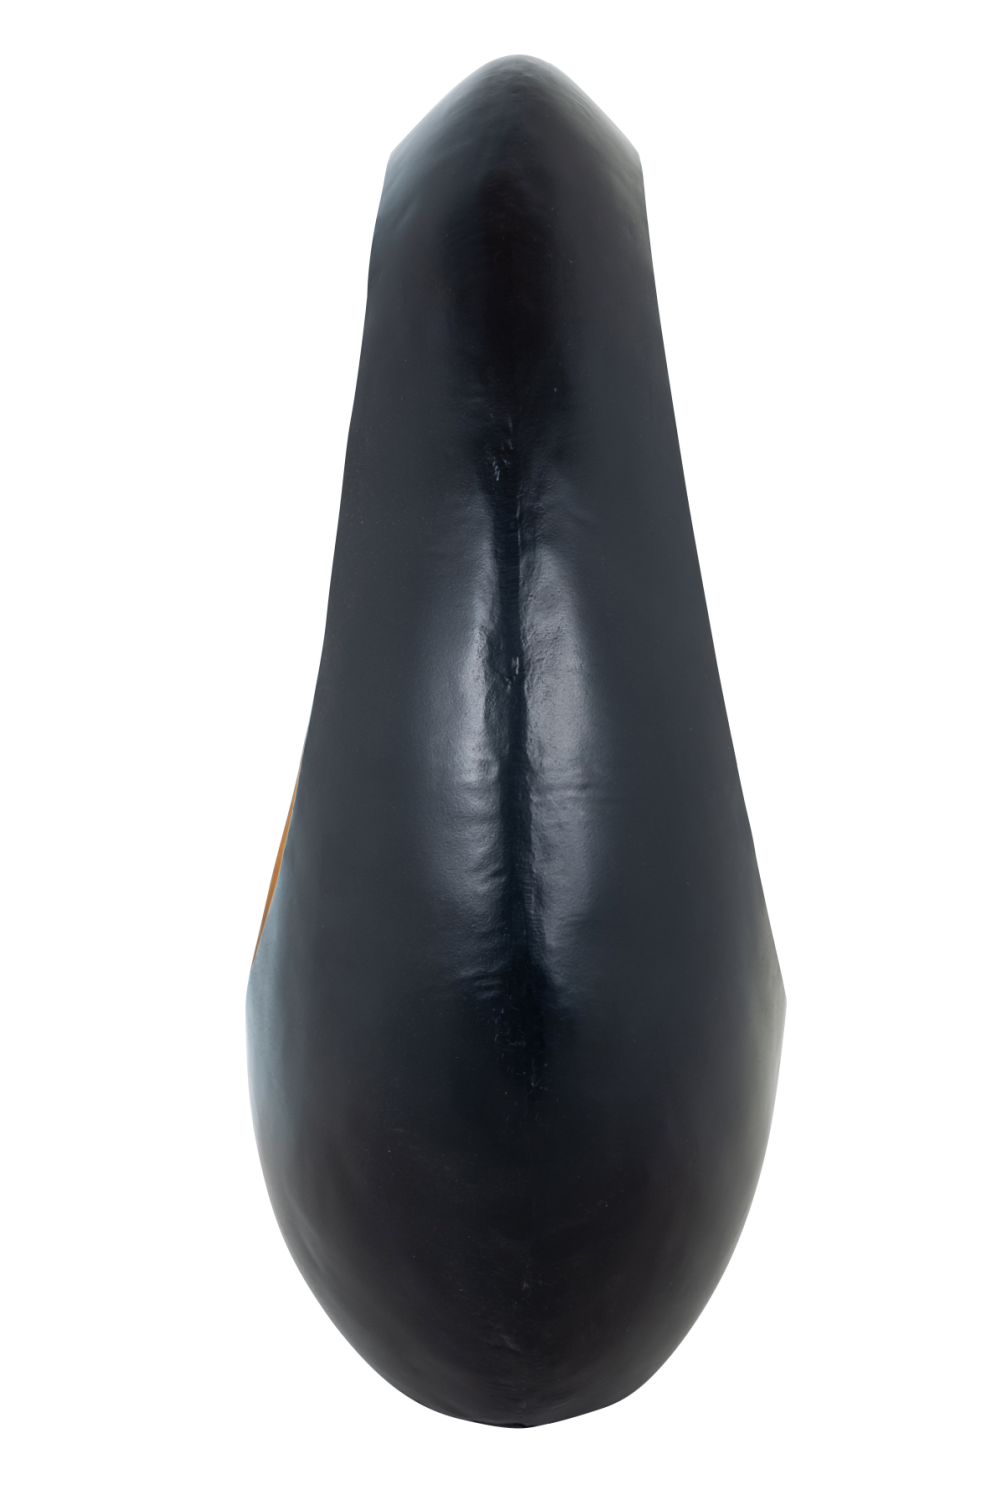 Black Coated Iron Candle Holder | OROA Chady | Oroa.com